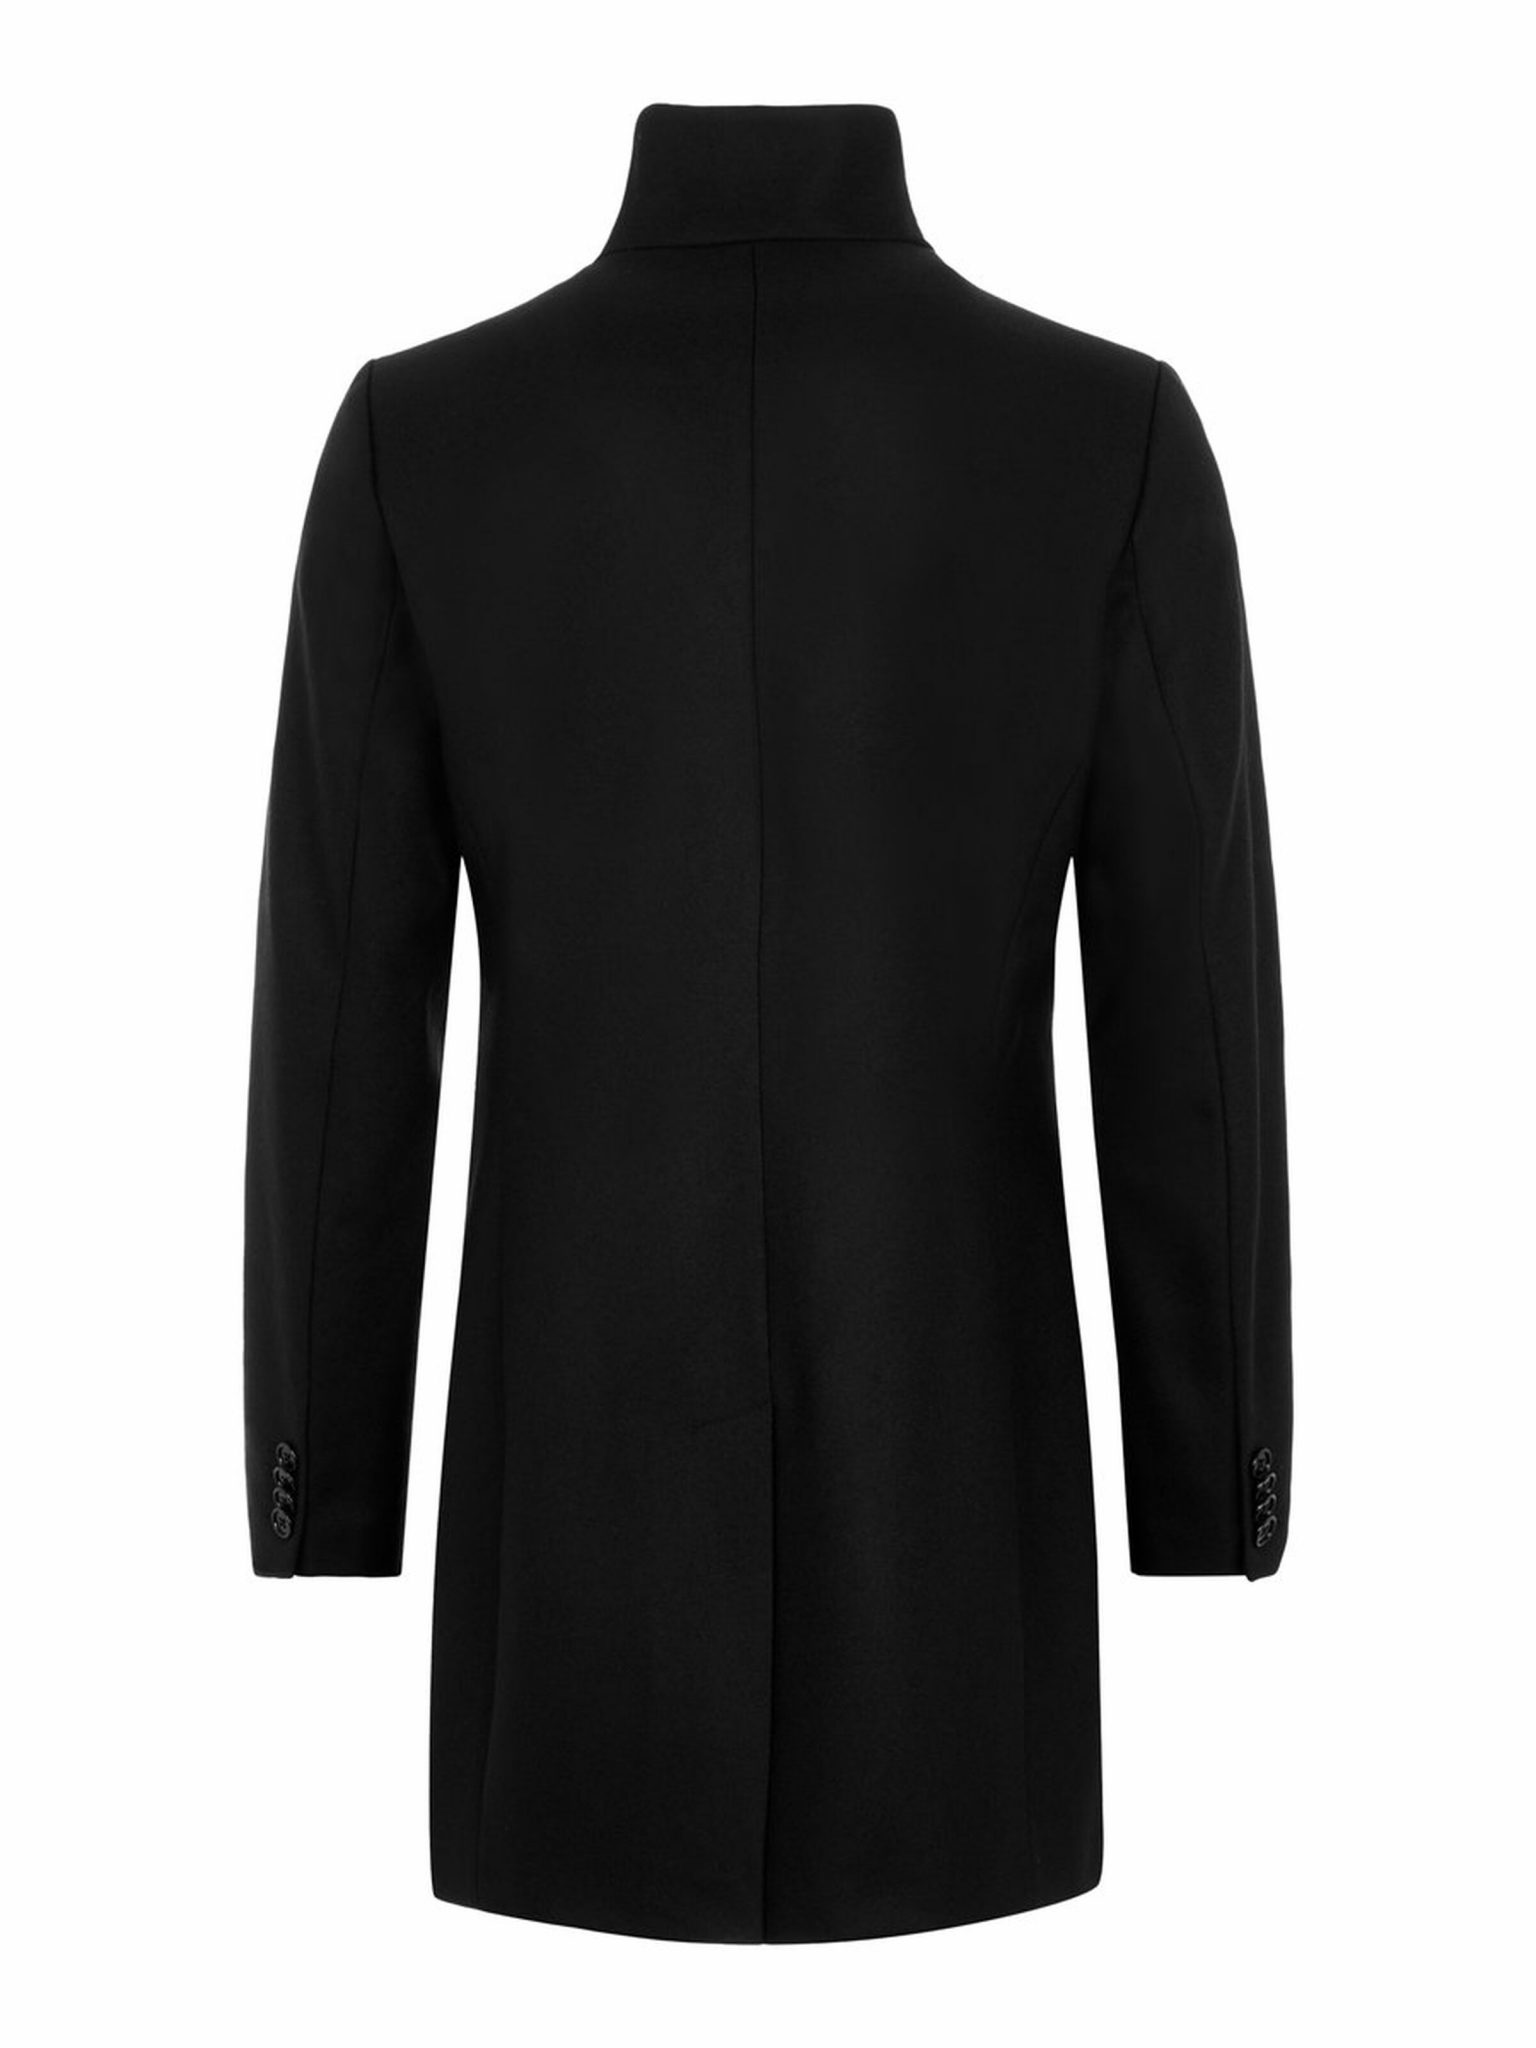 Men's J.LINDEBERG HOLGER COMPACT MELTON WOOL COAT BLACK - Aukia Menswear